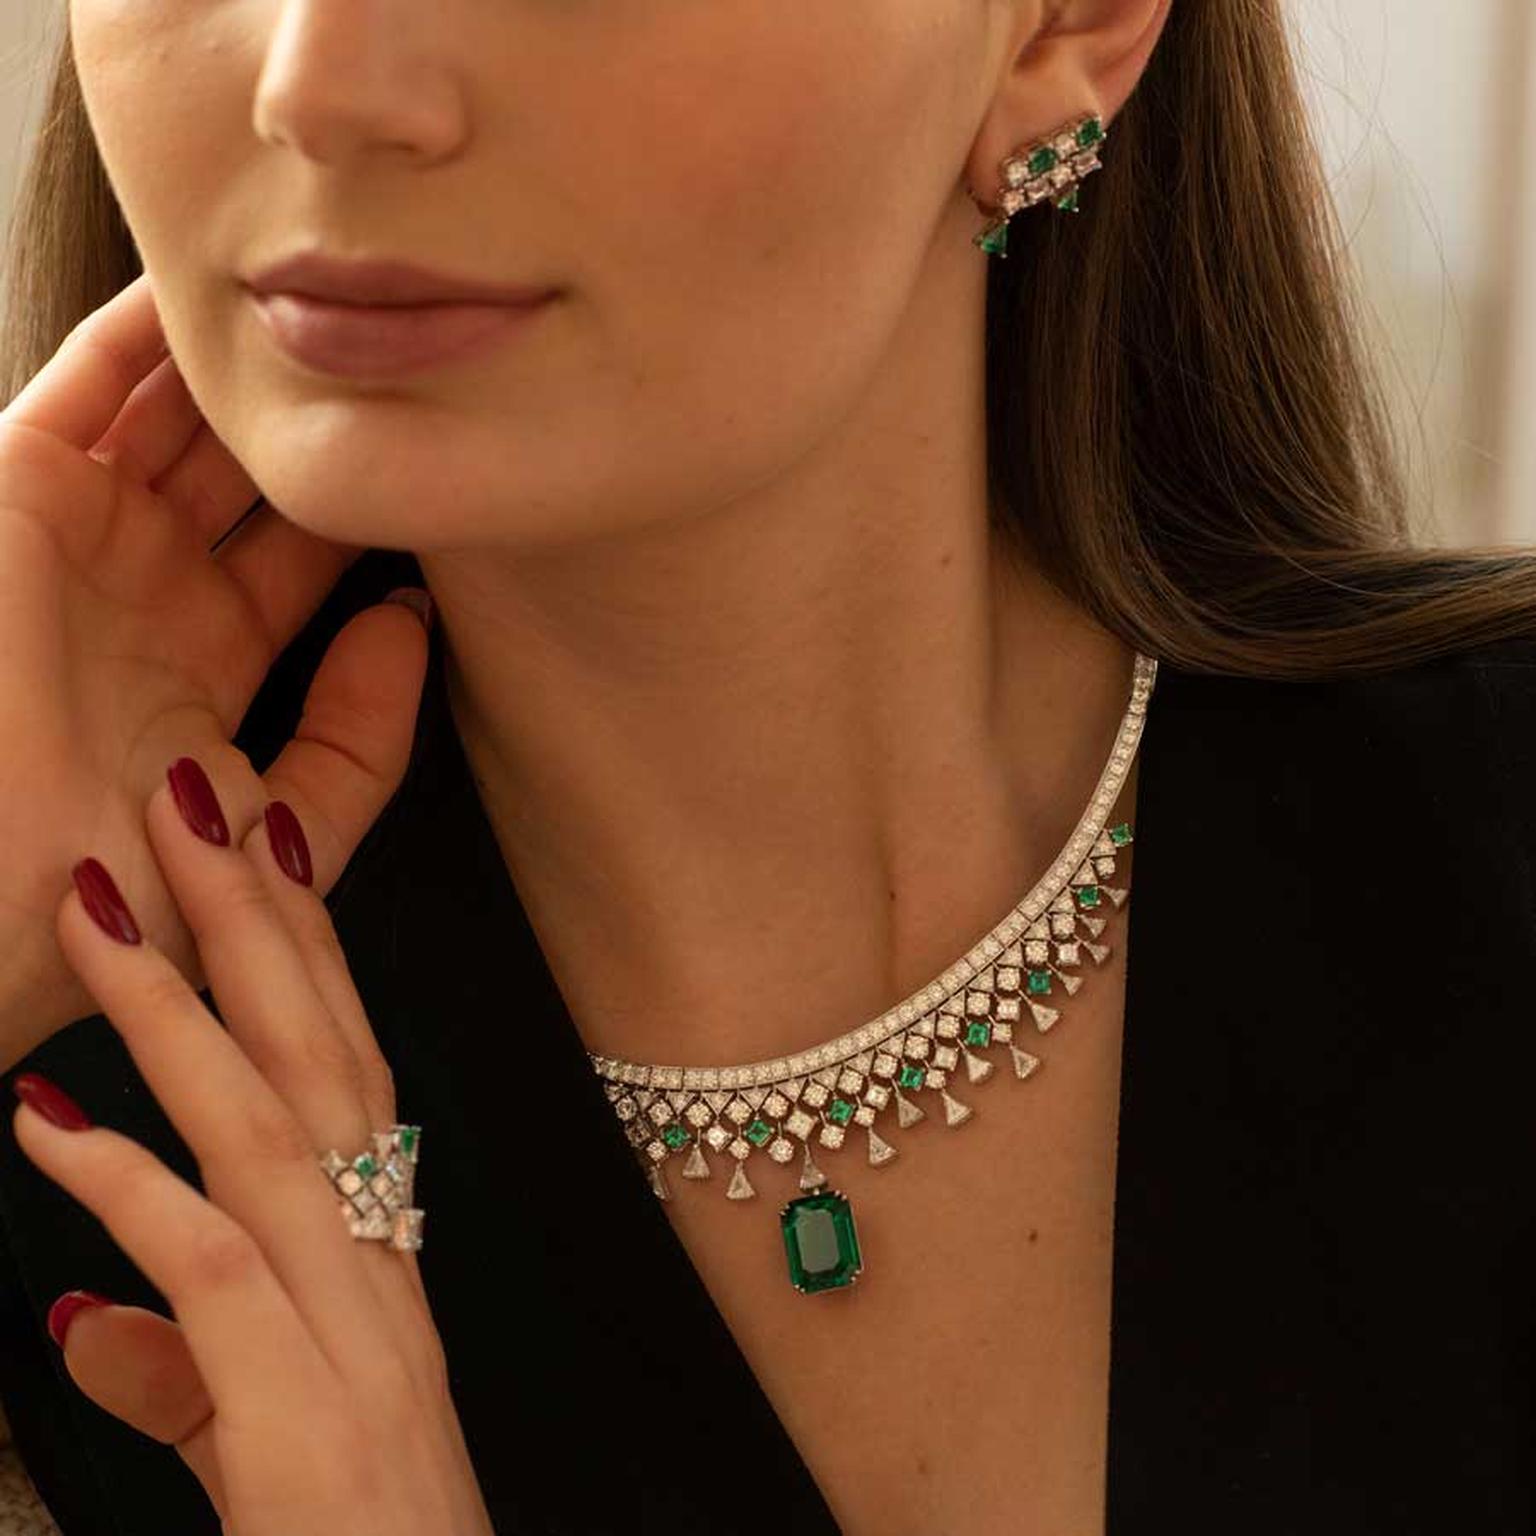 Piaget Treasures High Jewellery Collection - Piaget Luxury Jewellery